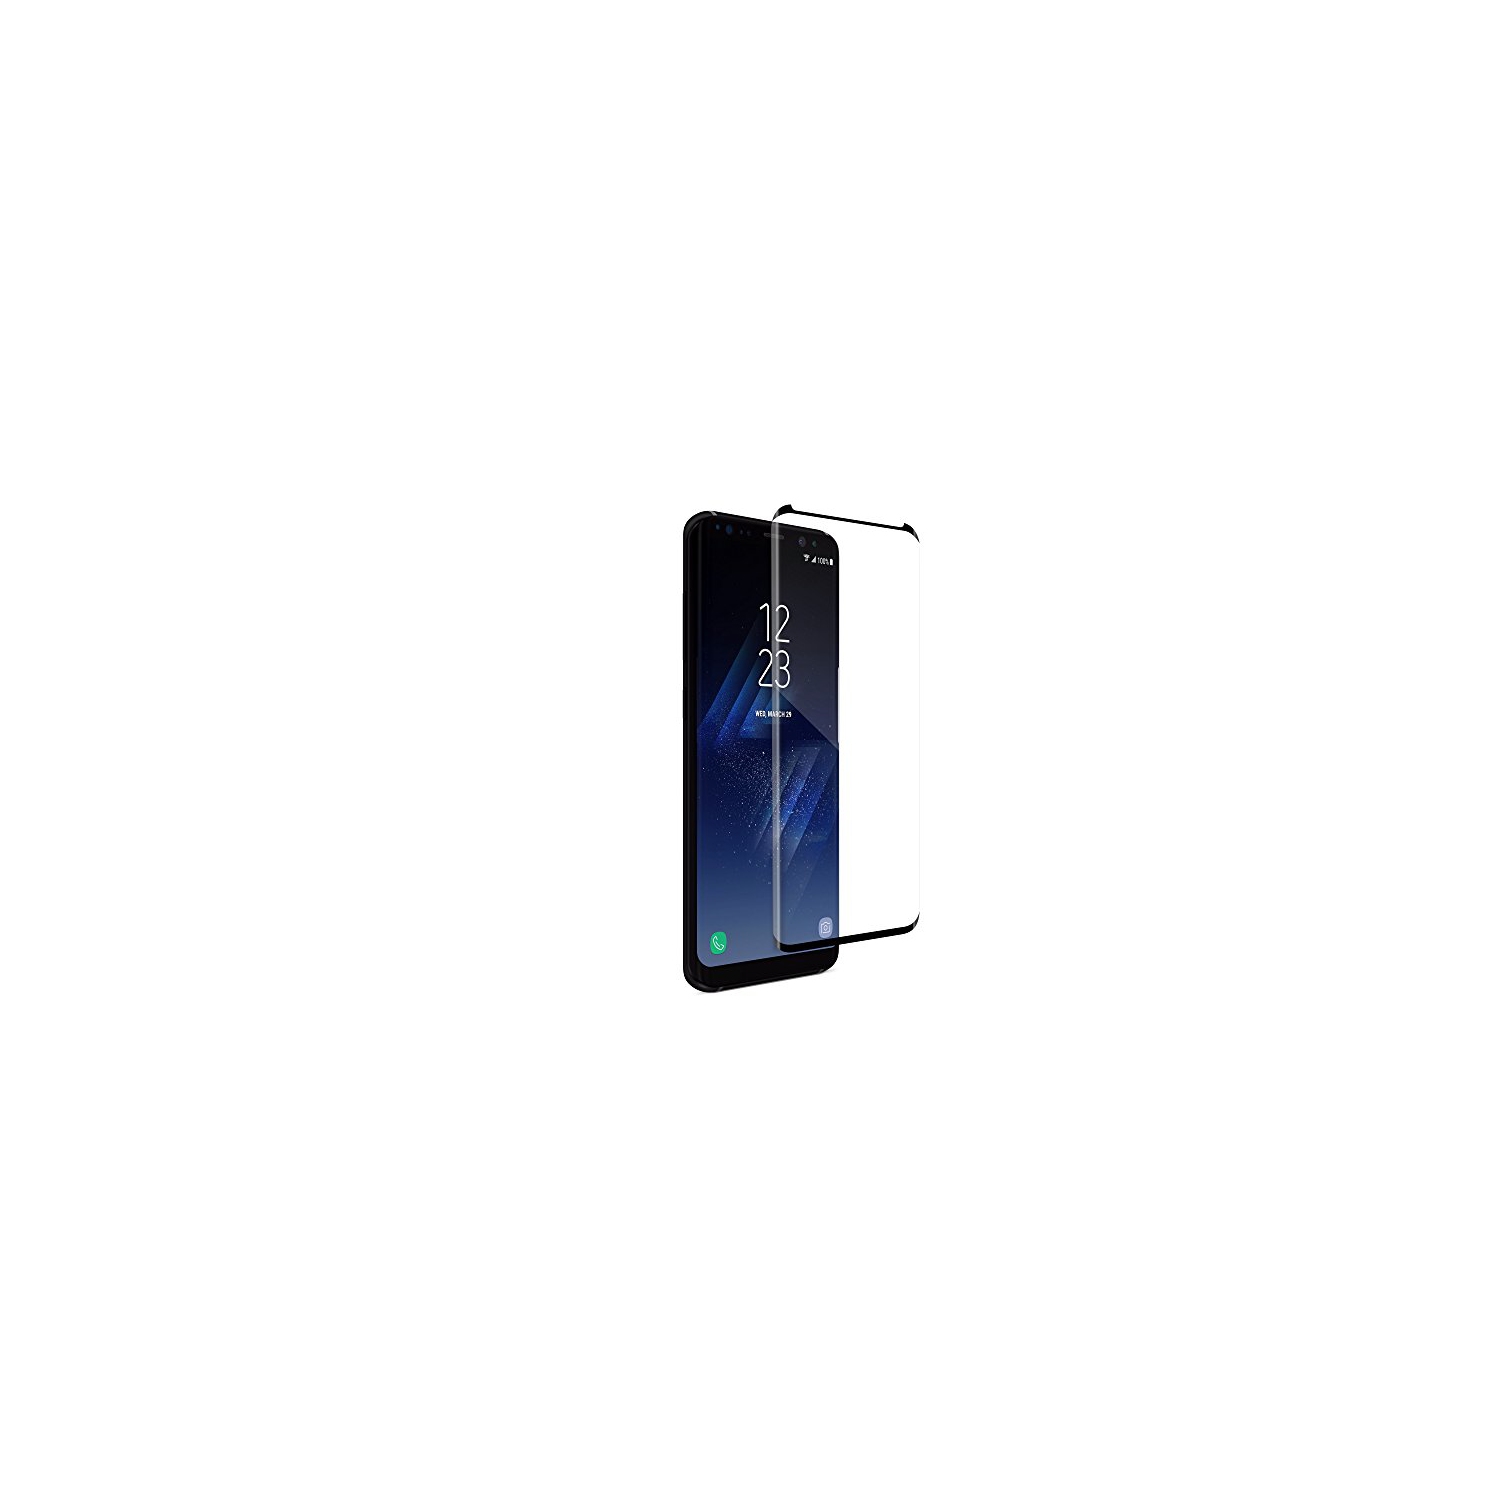 Samsung Galaxy S8 Naztech Premium HD Tempered Glass Screen Protector